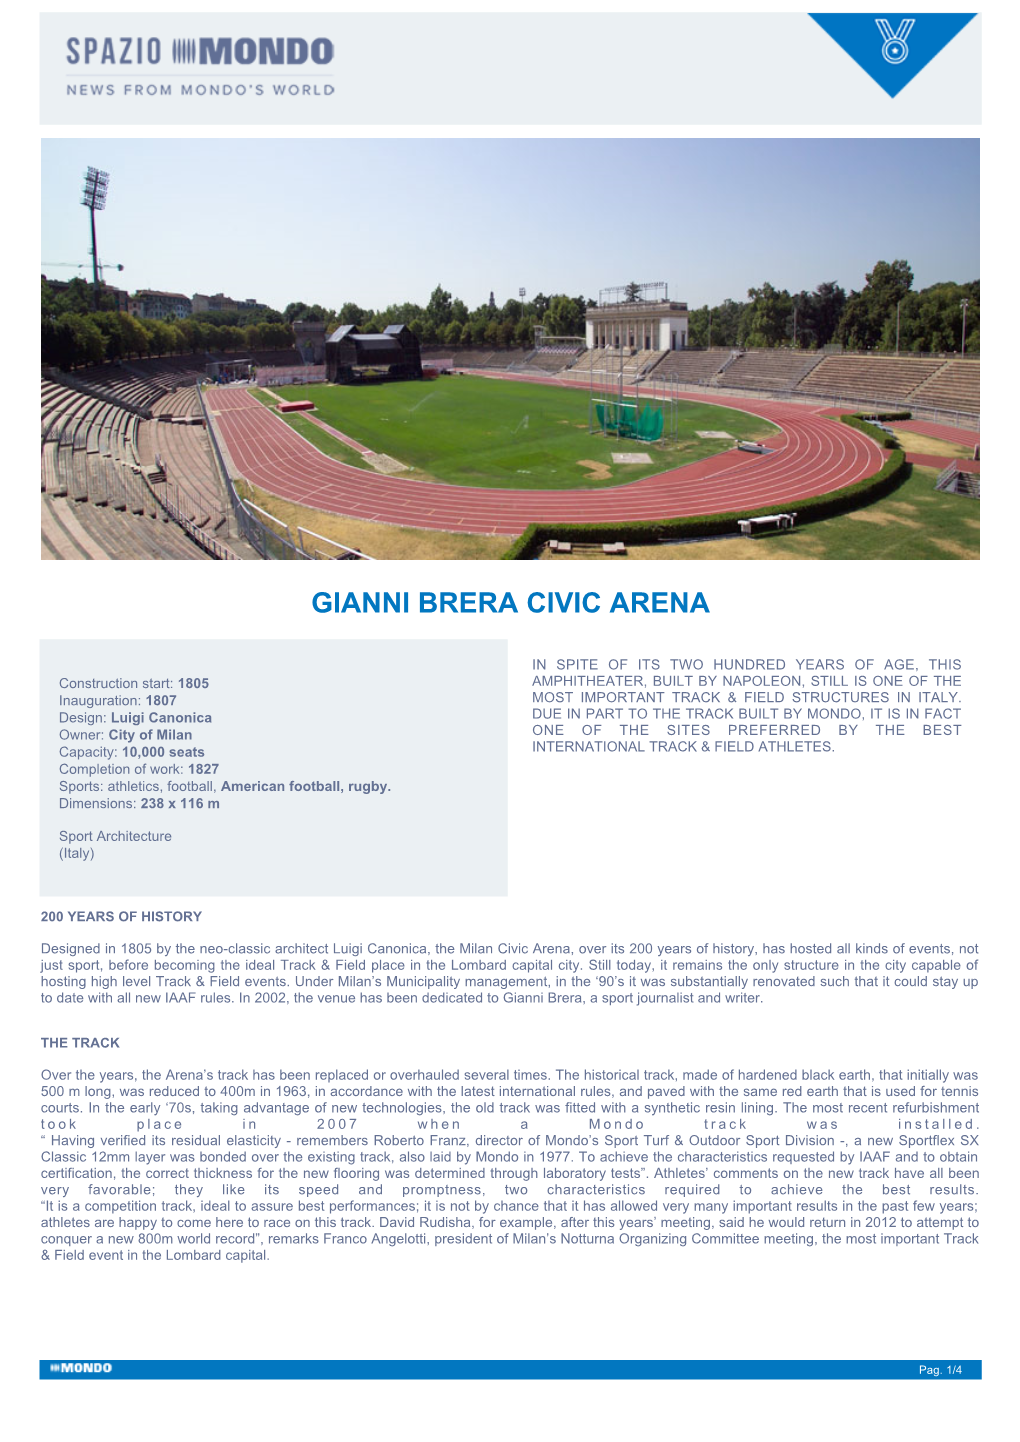 Gianni Brera Civic Arena